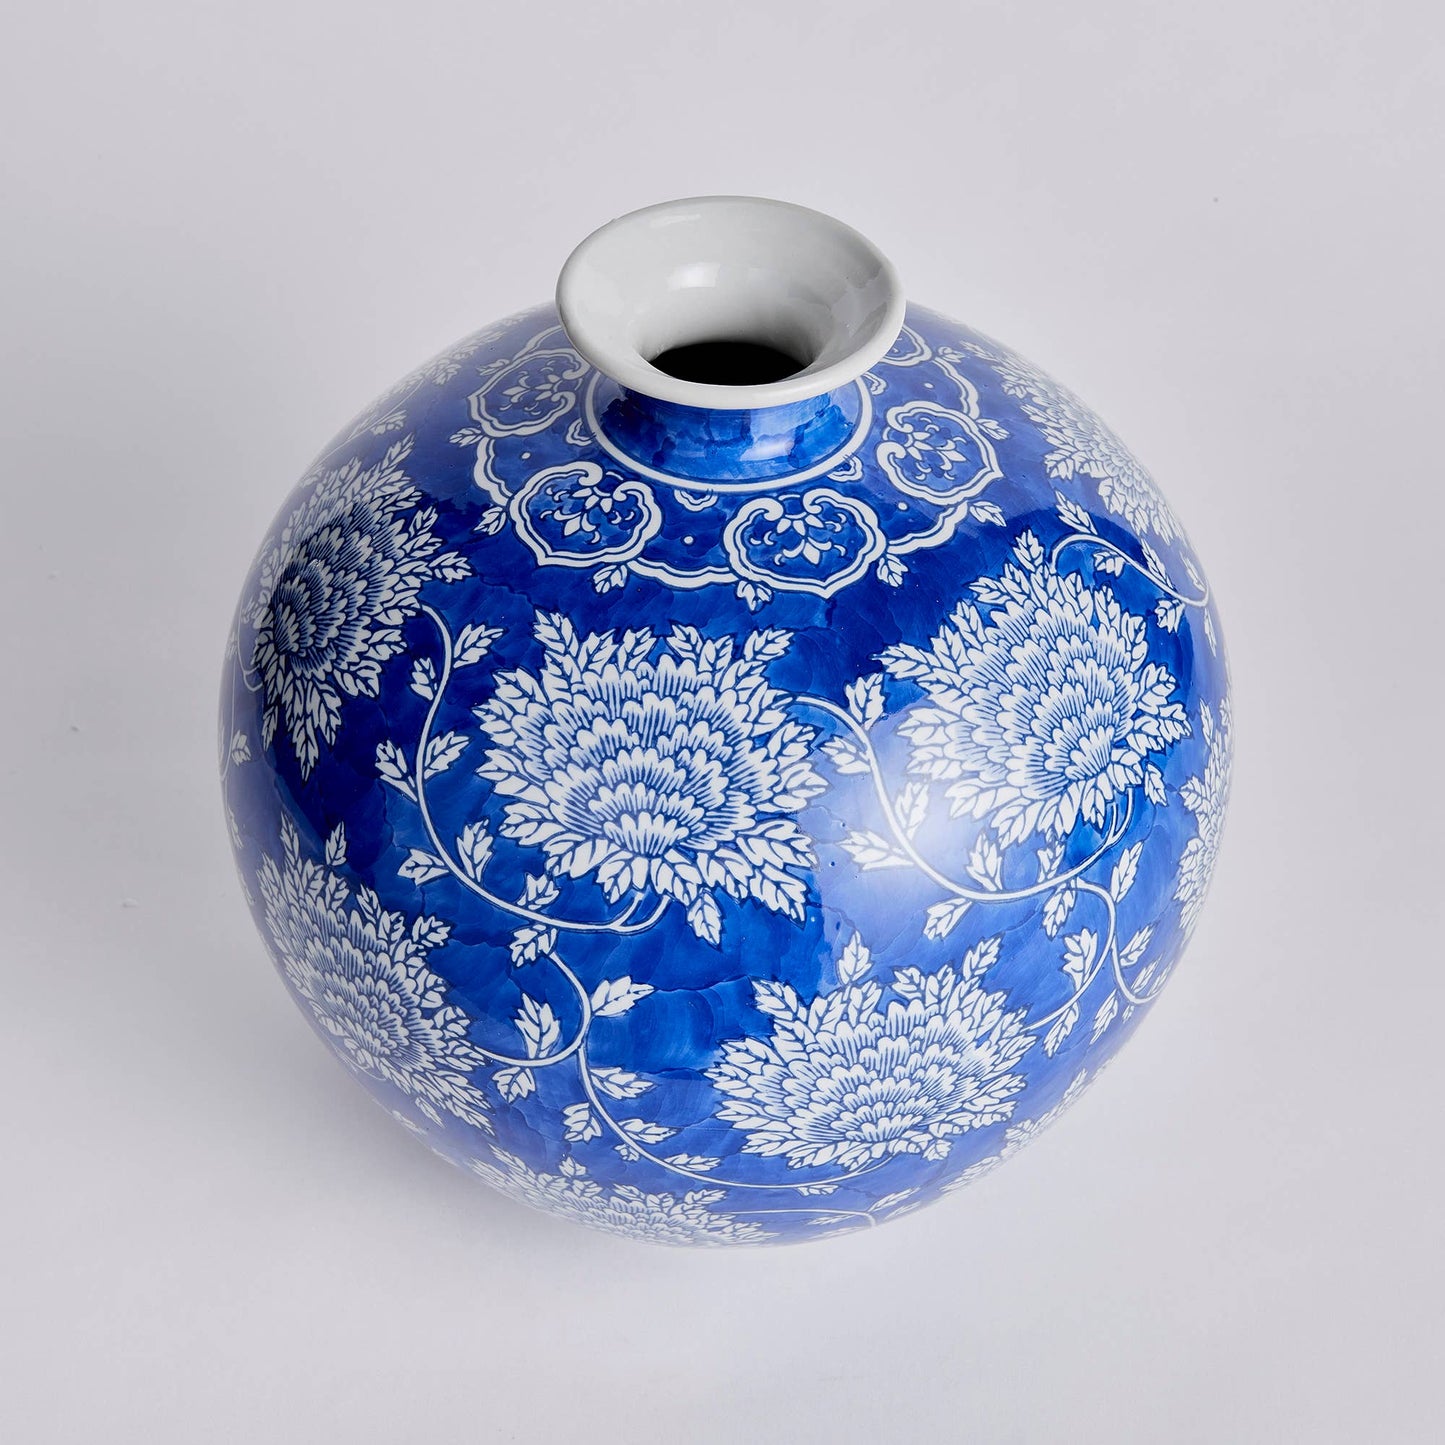 Barclay Butera Dynasty Tang Vase: Classic Blue/White / Ceramic